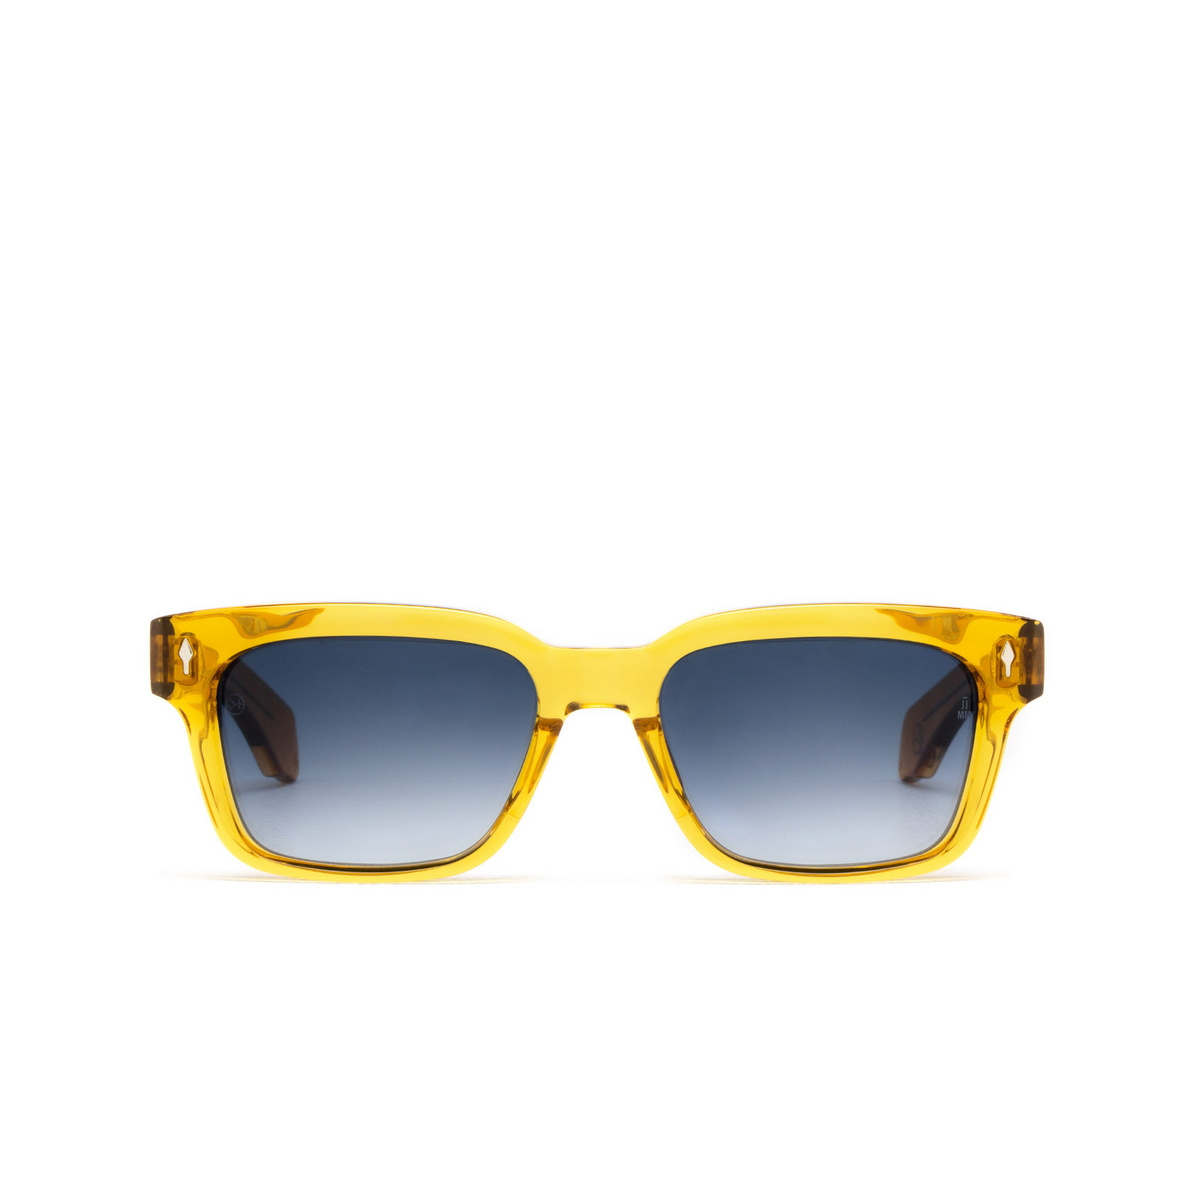 Jacques Marie Mage MOLINO 55 X DIAMOND CROSS RANCH Sunglasses RAIN SLICKER YELLOW - front view